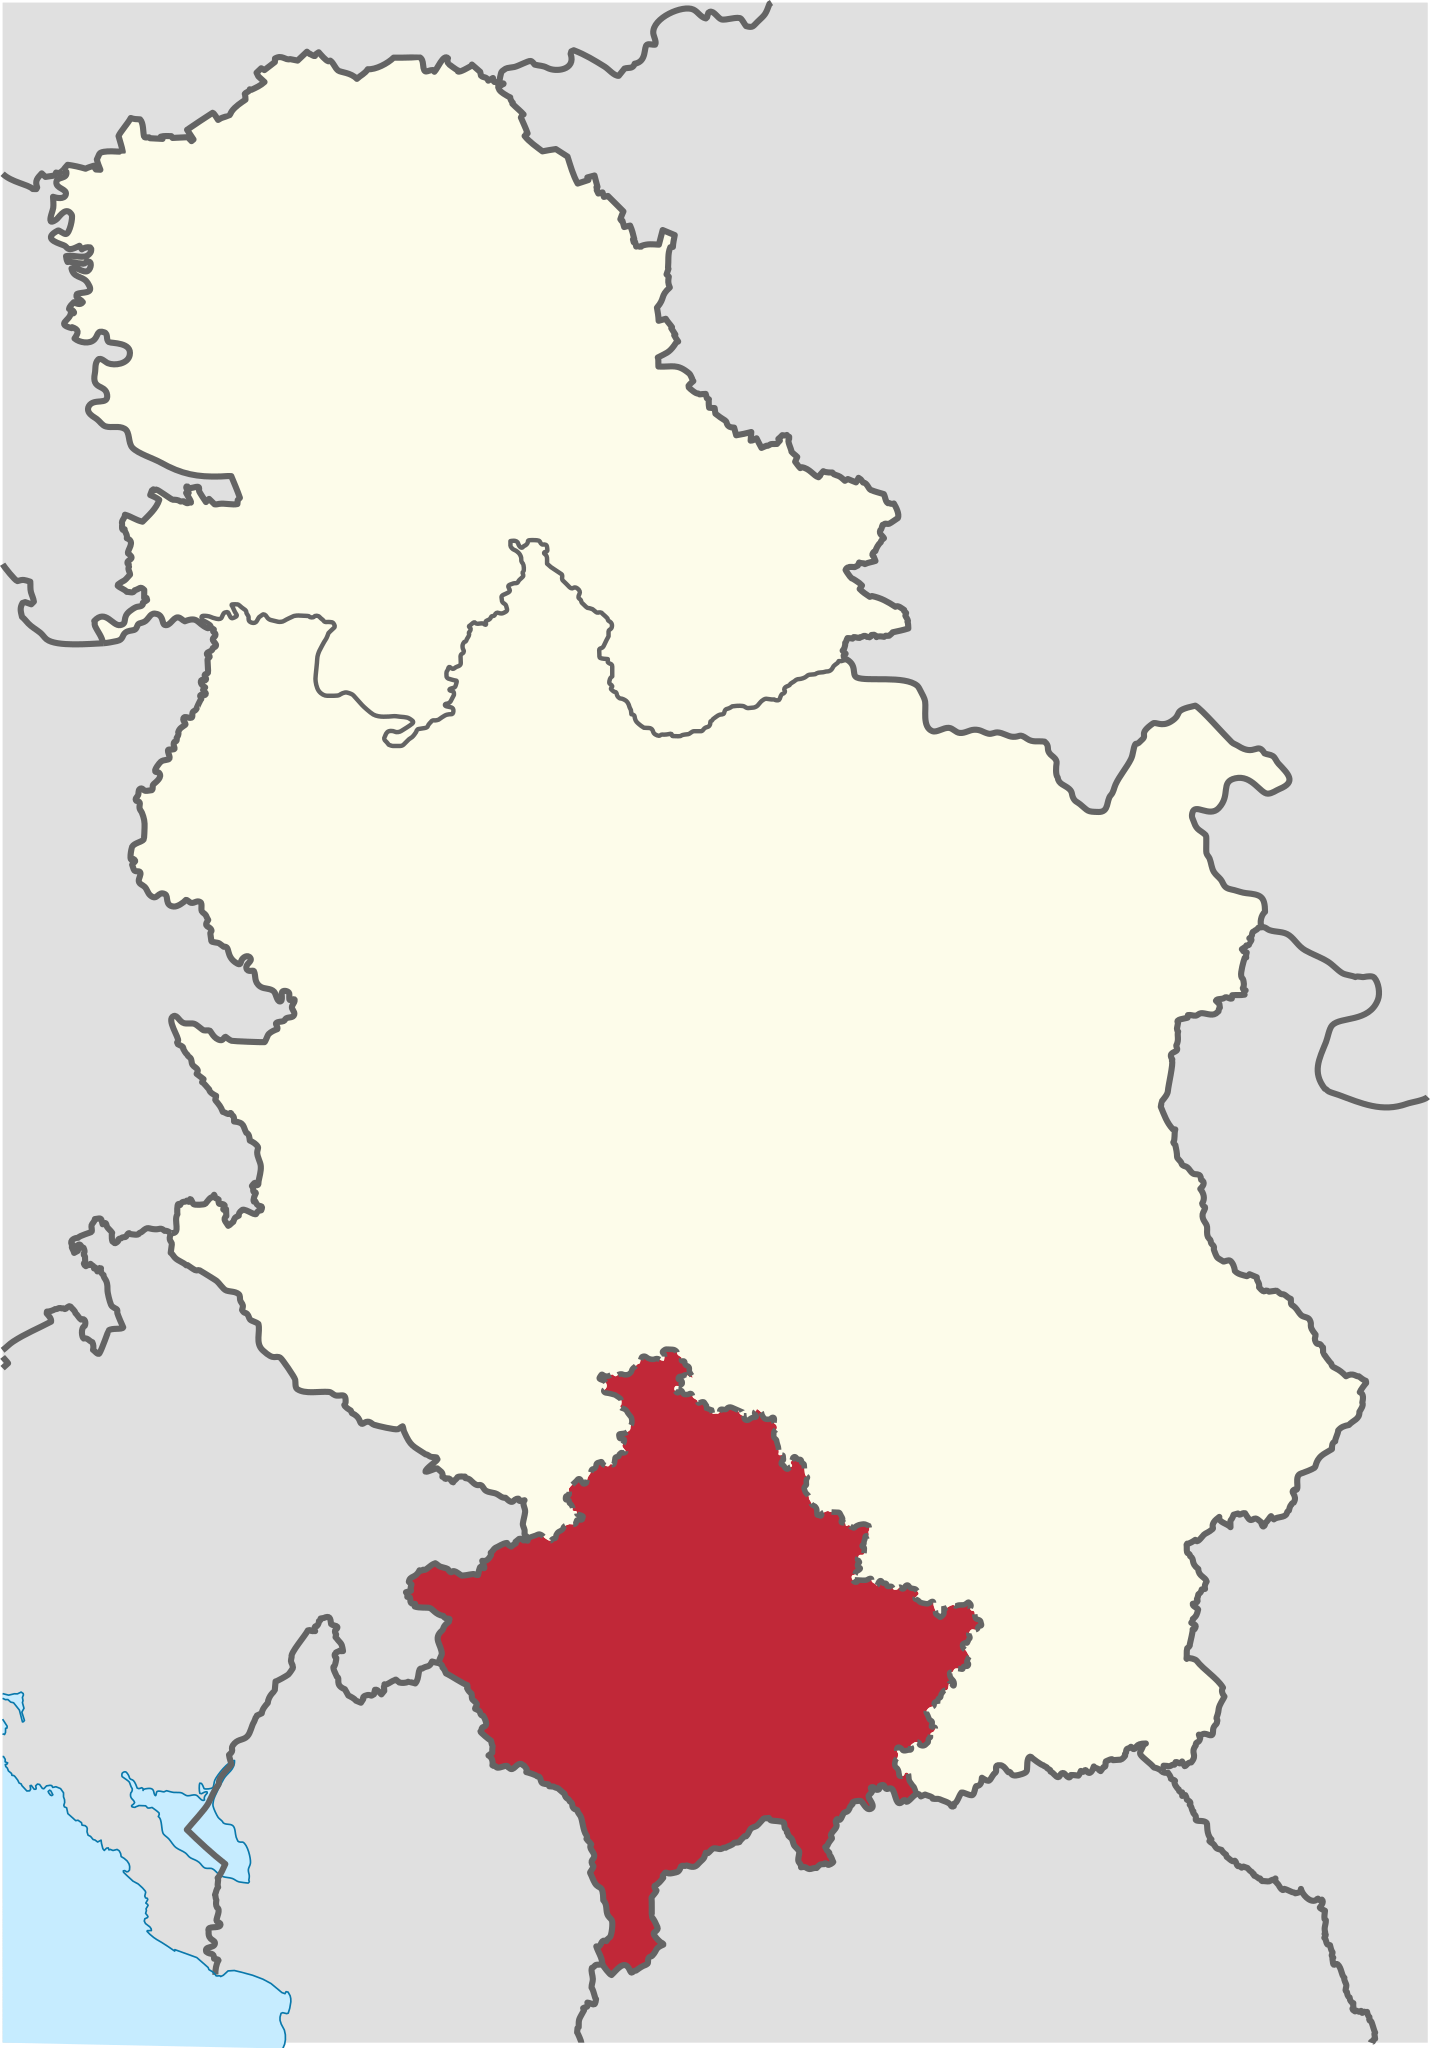 Location of Kosovo and Metohija within Serbia